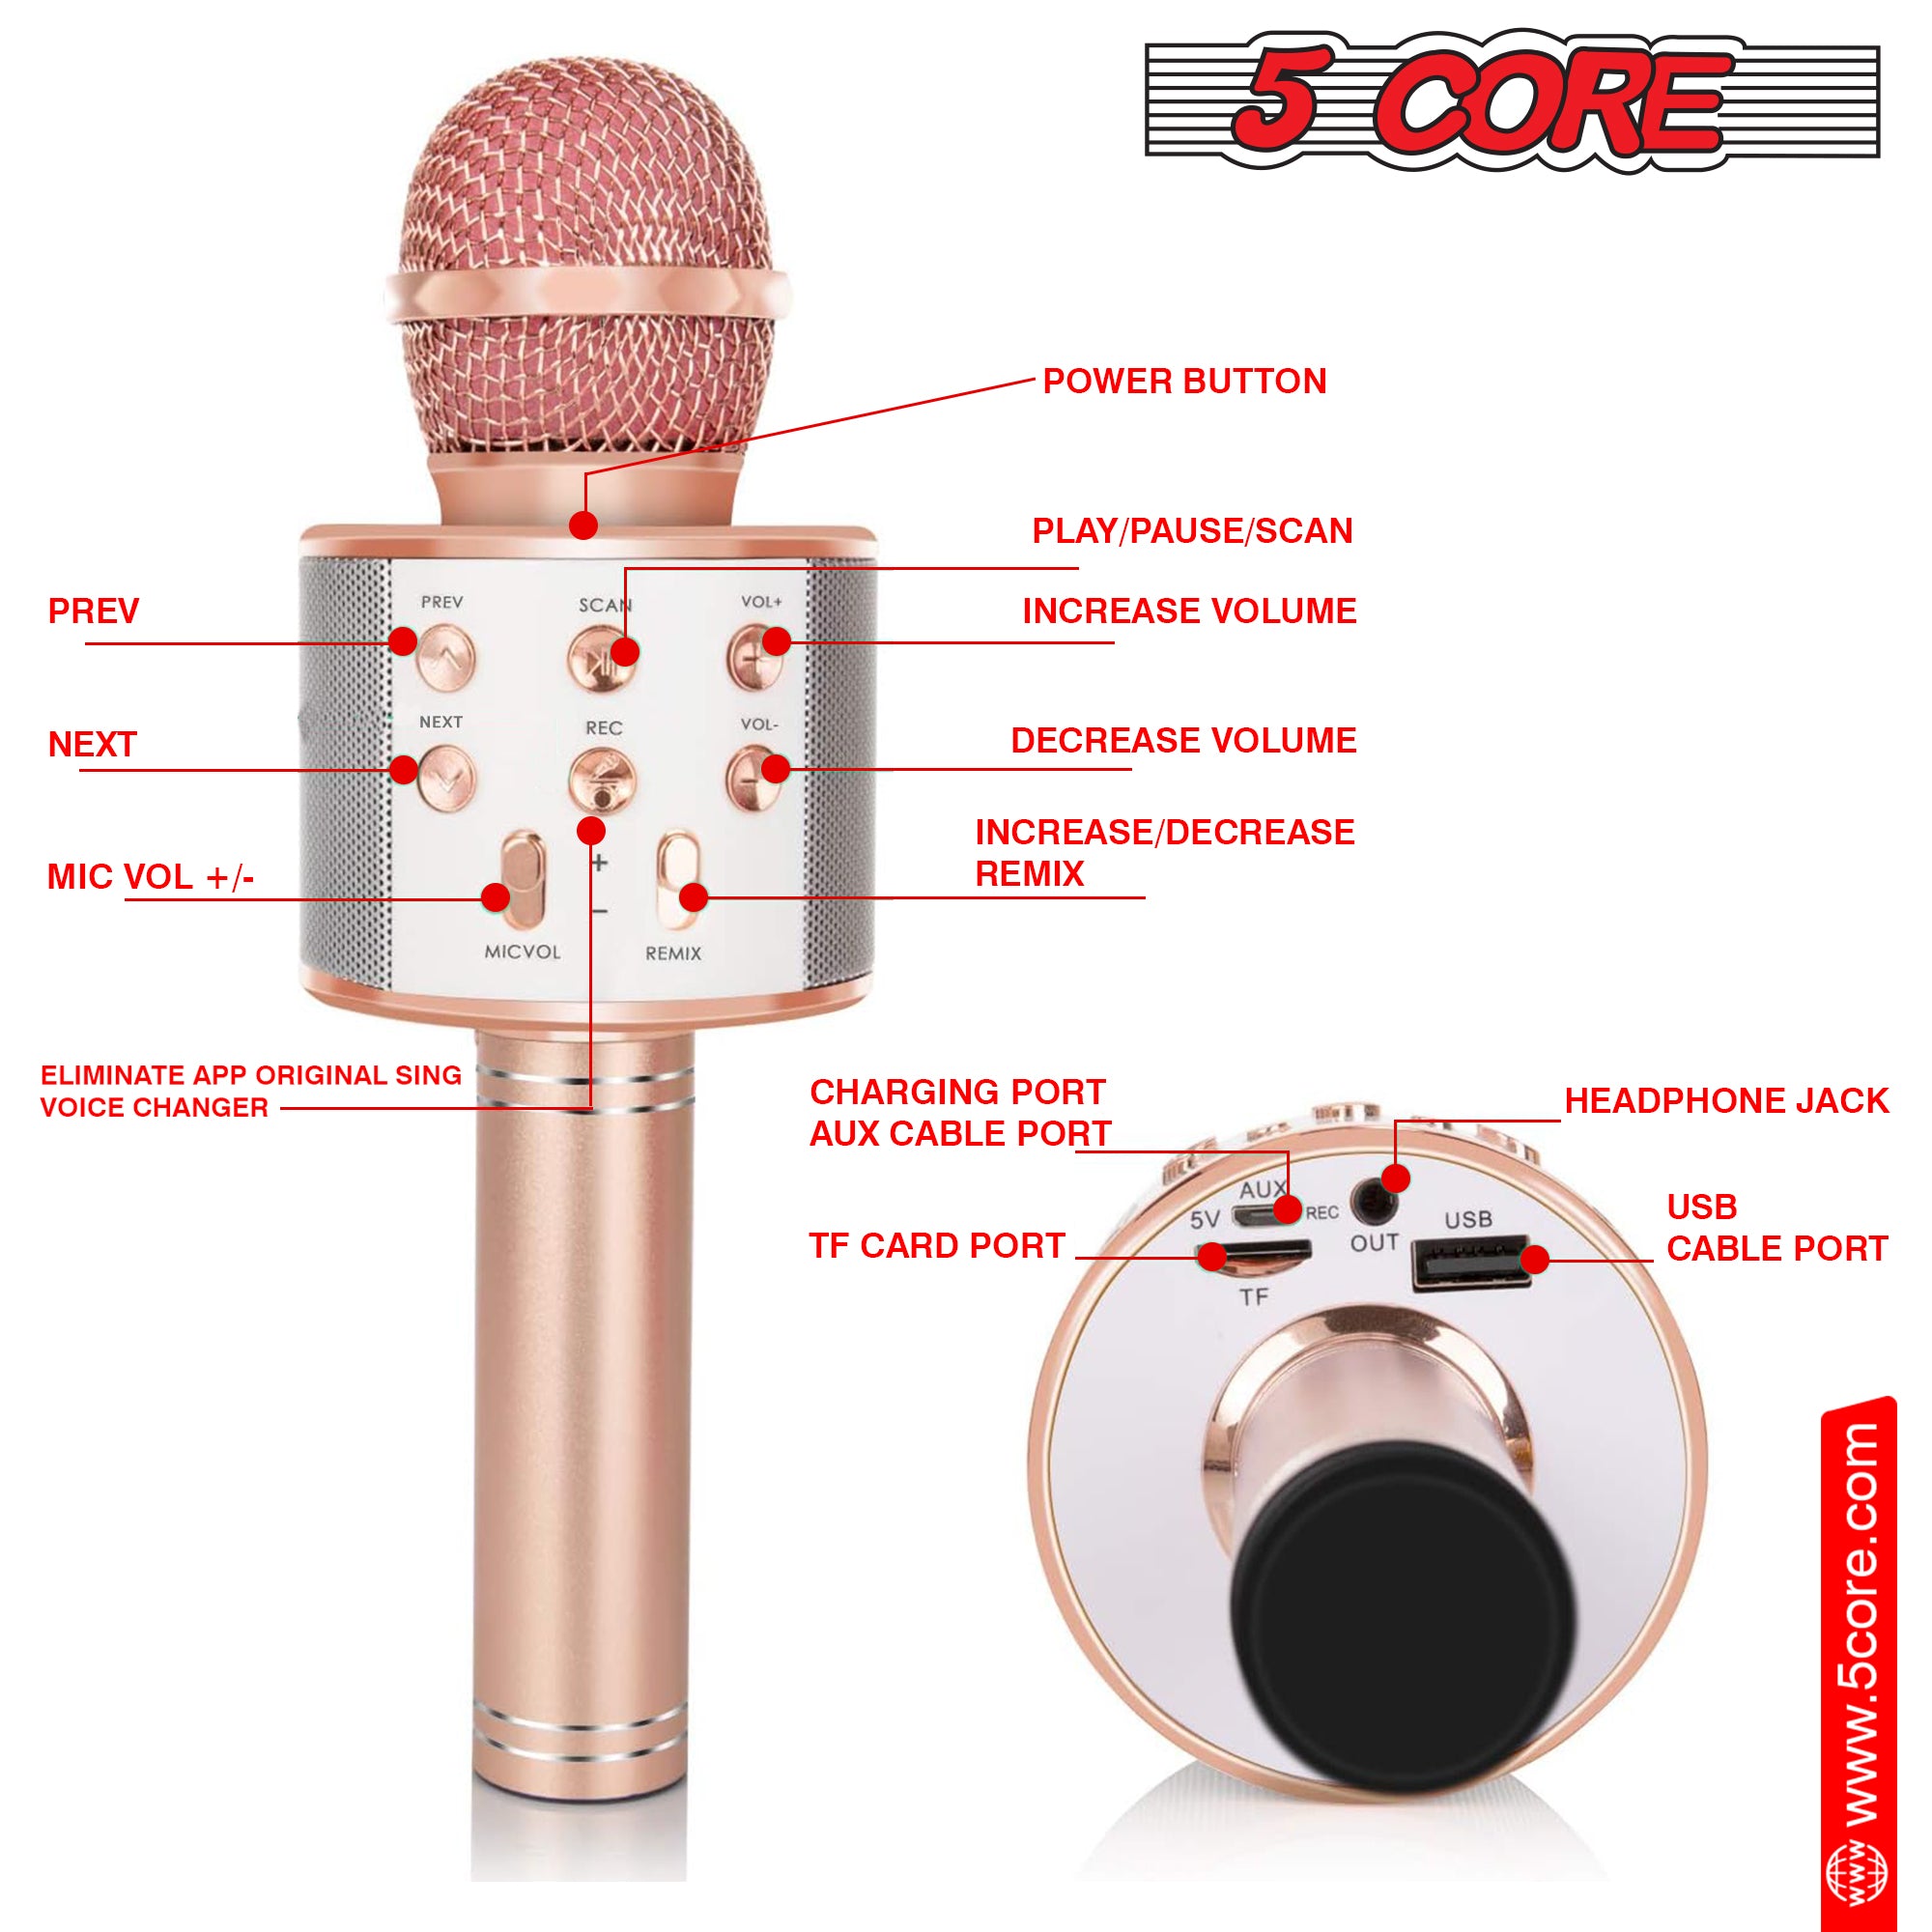 5 Core Bluetooth Wireless Karaoke Microphone, All-in-One Premium Handheld Karaoke Mic Speaker Recorder Player w/ Adjustable Remix FM Radio Great Gifts for Girls Boys Adults All Age (Copper)- WM SPK COPPER